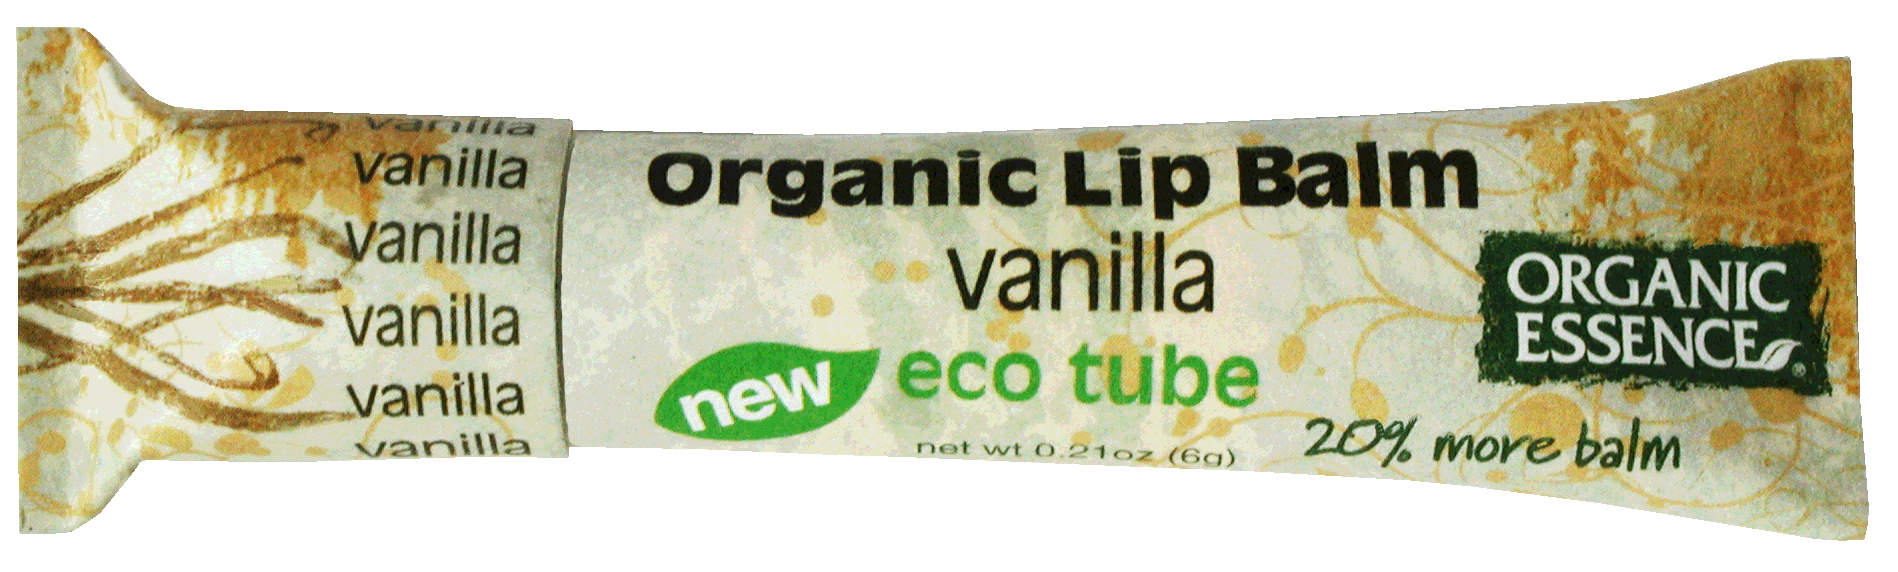 Biodegradeable eco-tube organic lip balm